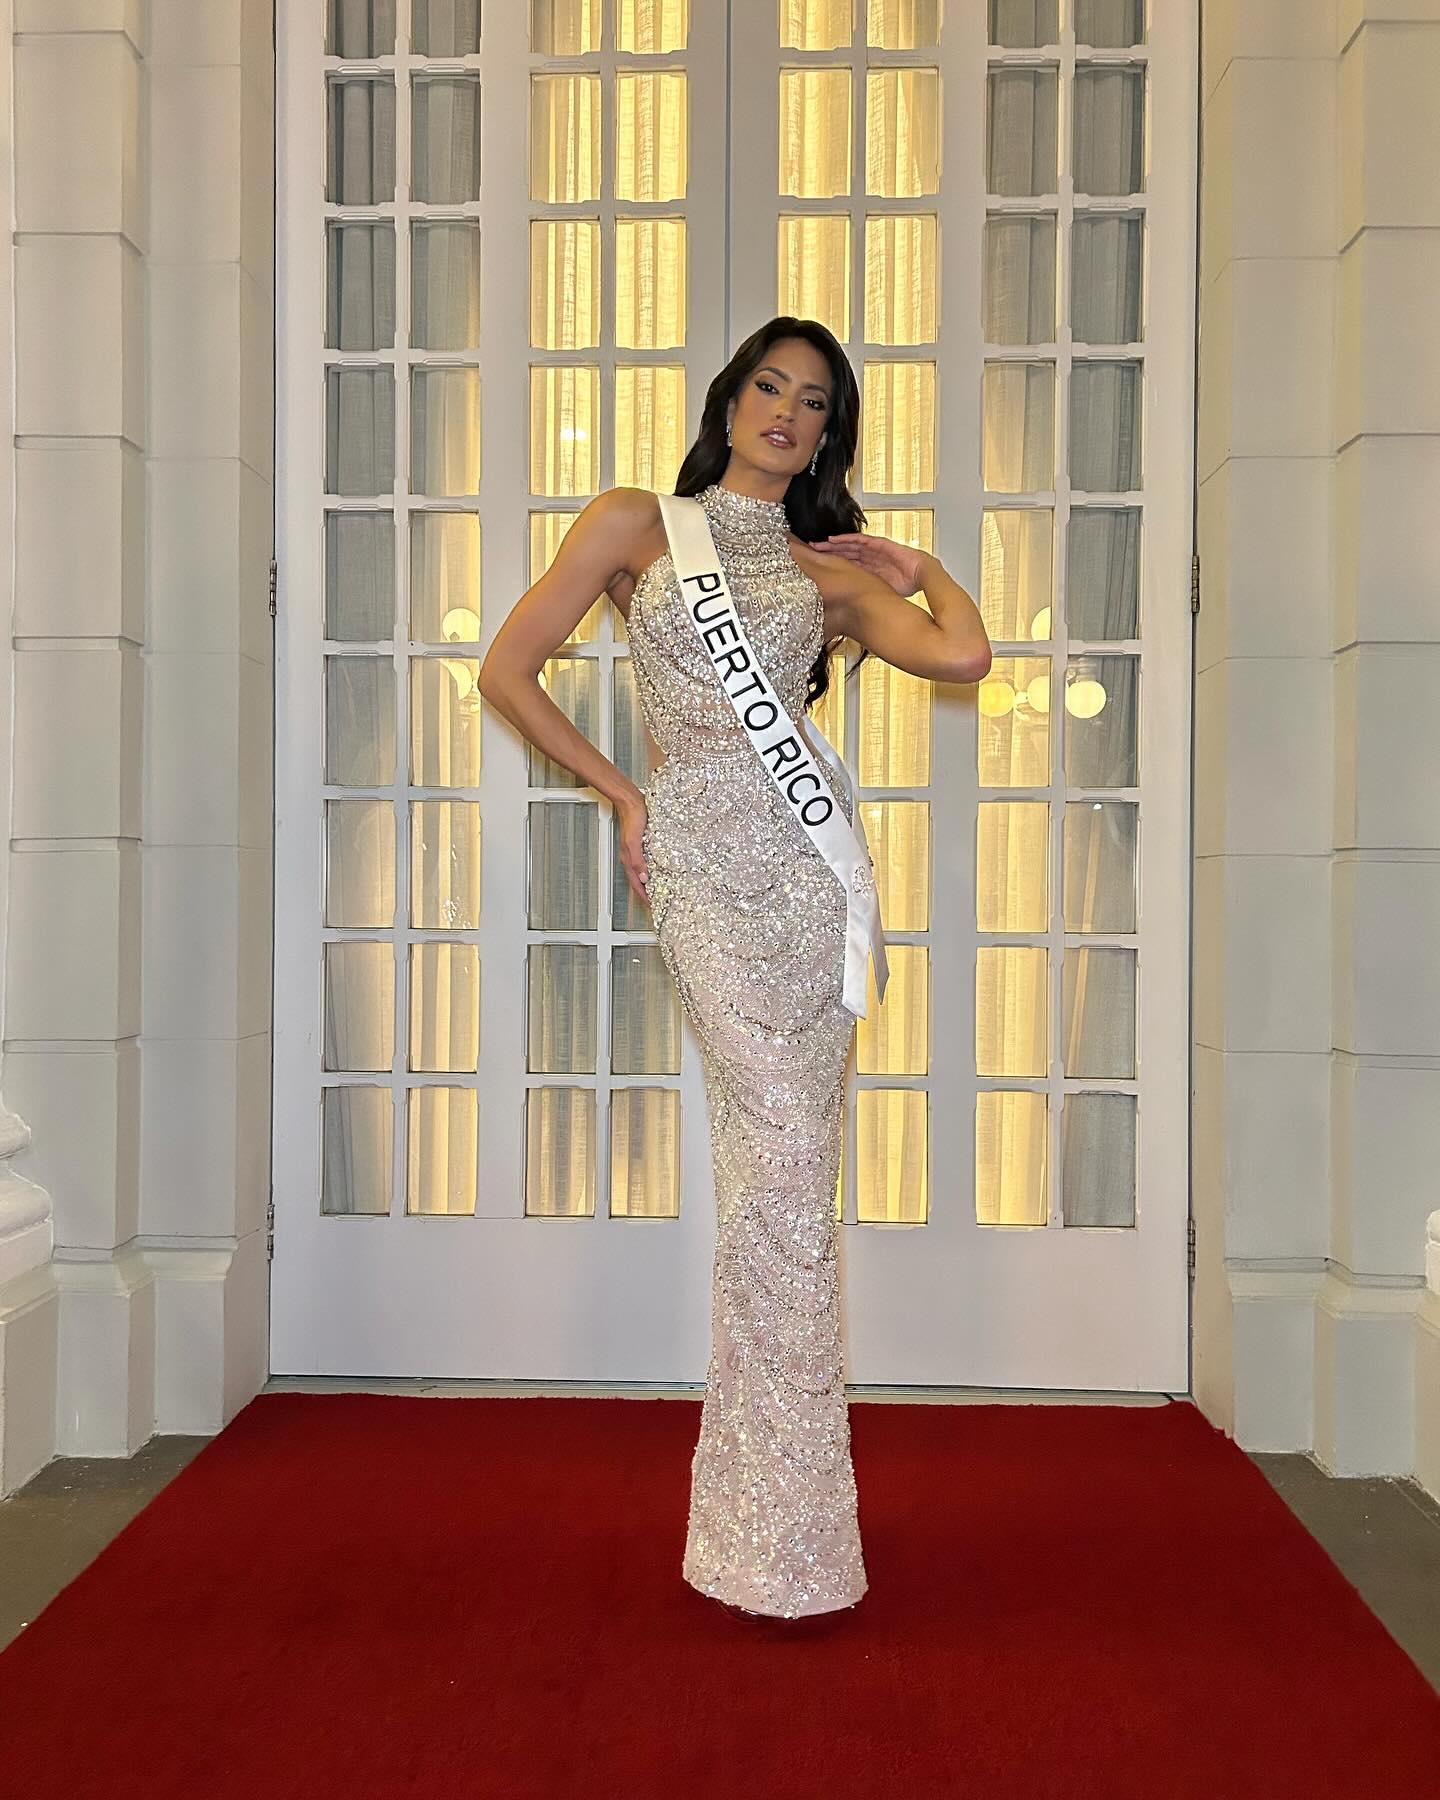 karla guilfu, top 5 de miss universe 2023/1st runner-up de miss supranational 2021. - Página 22 43185110